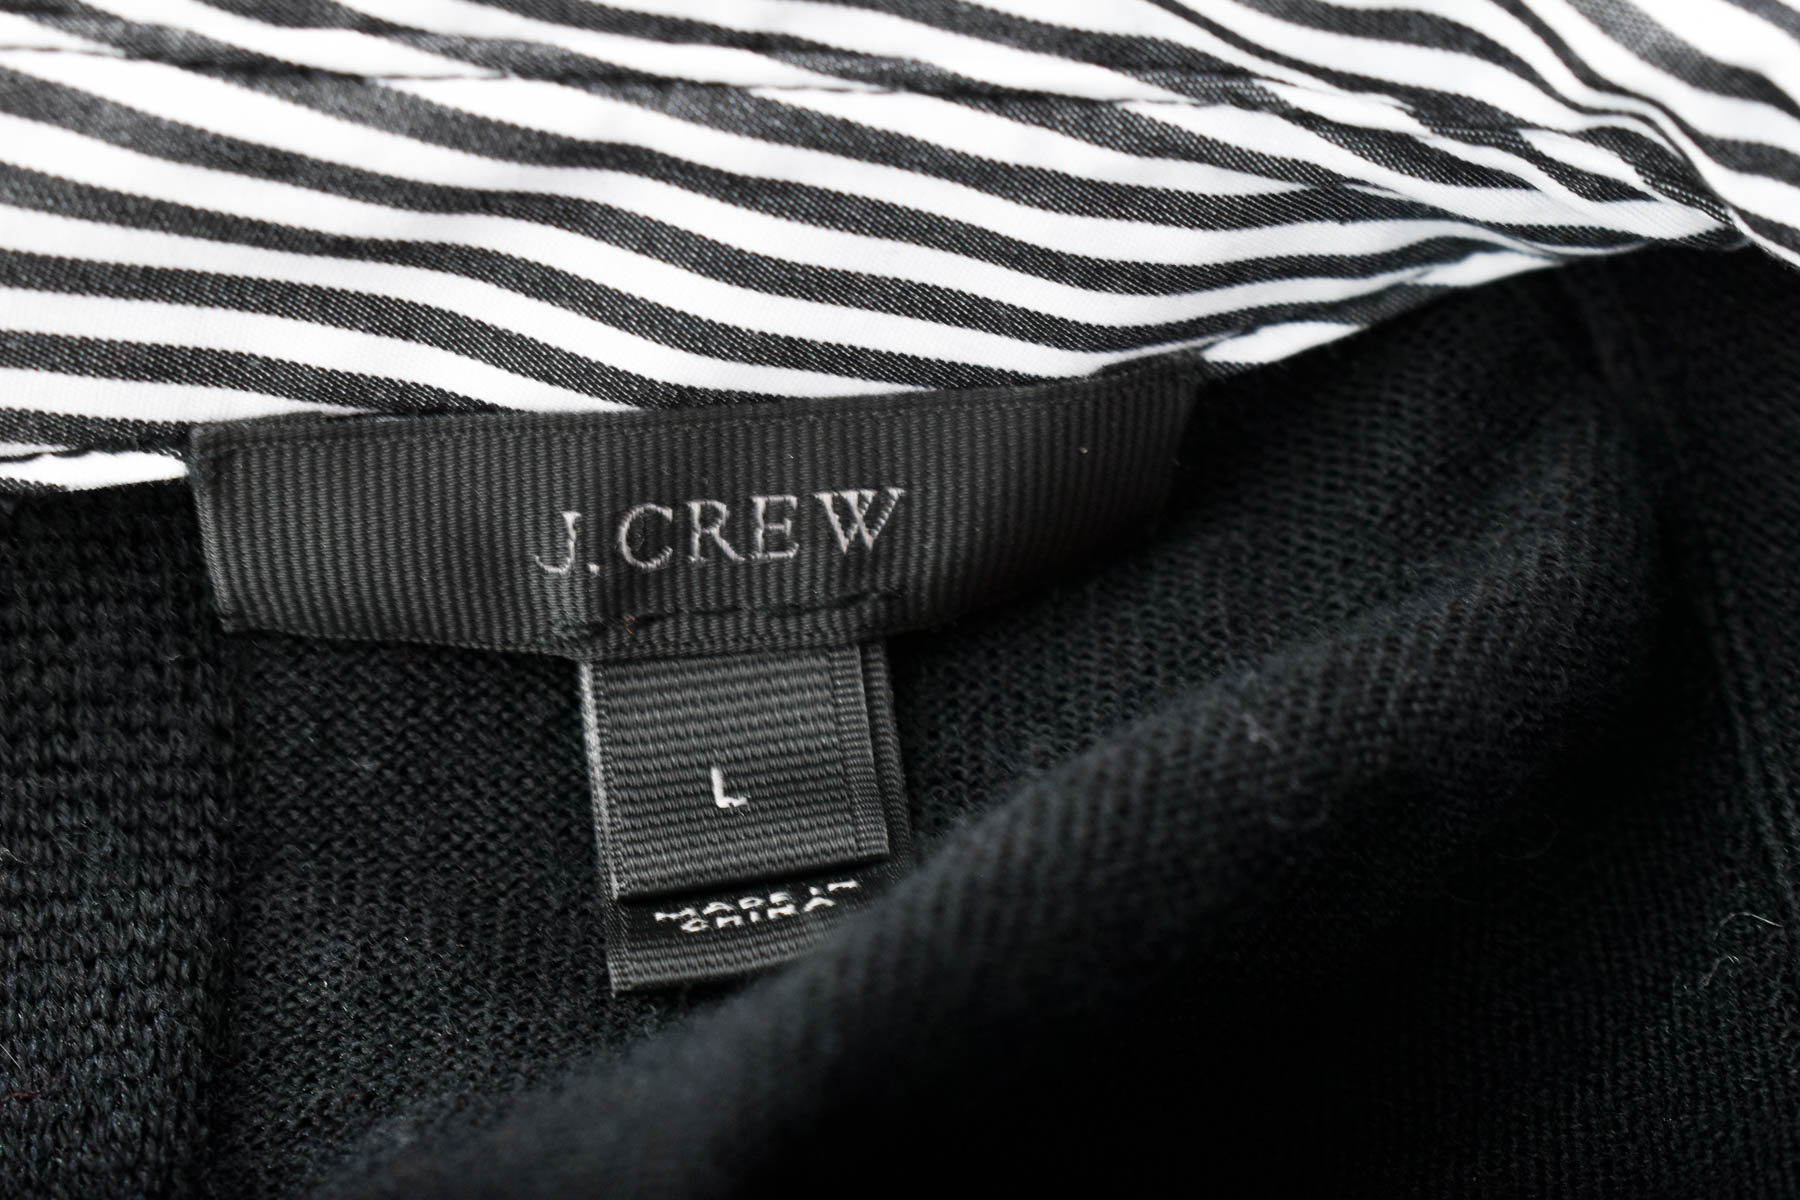 Women's sweater - J.CREW - 2